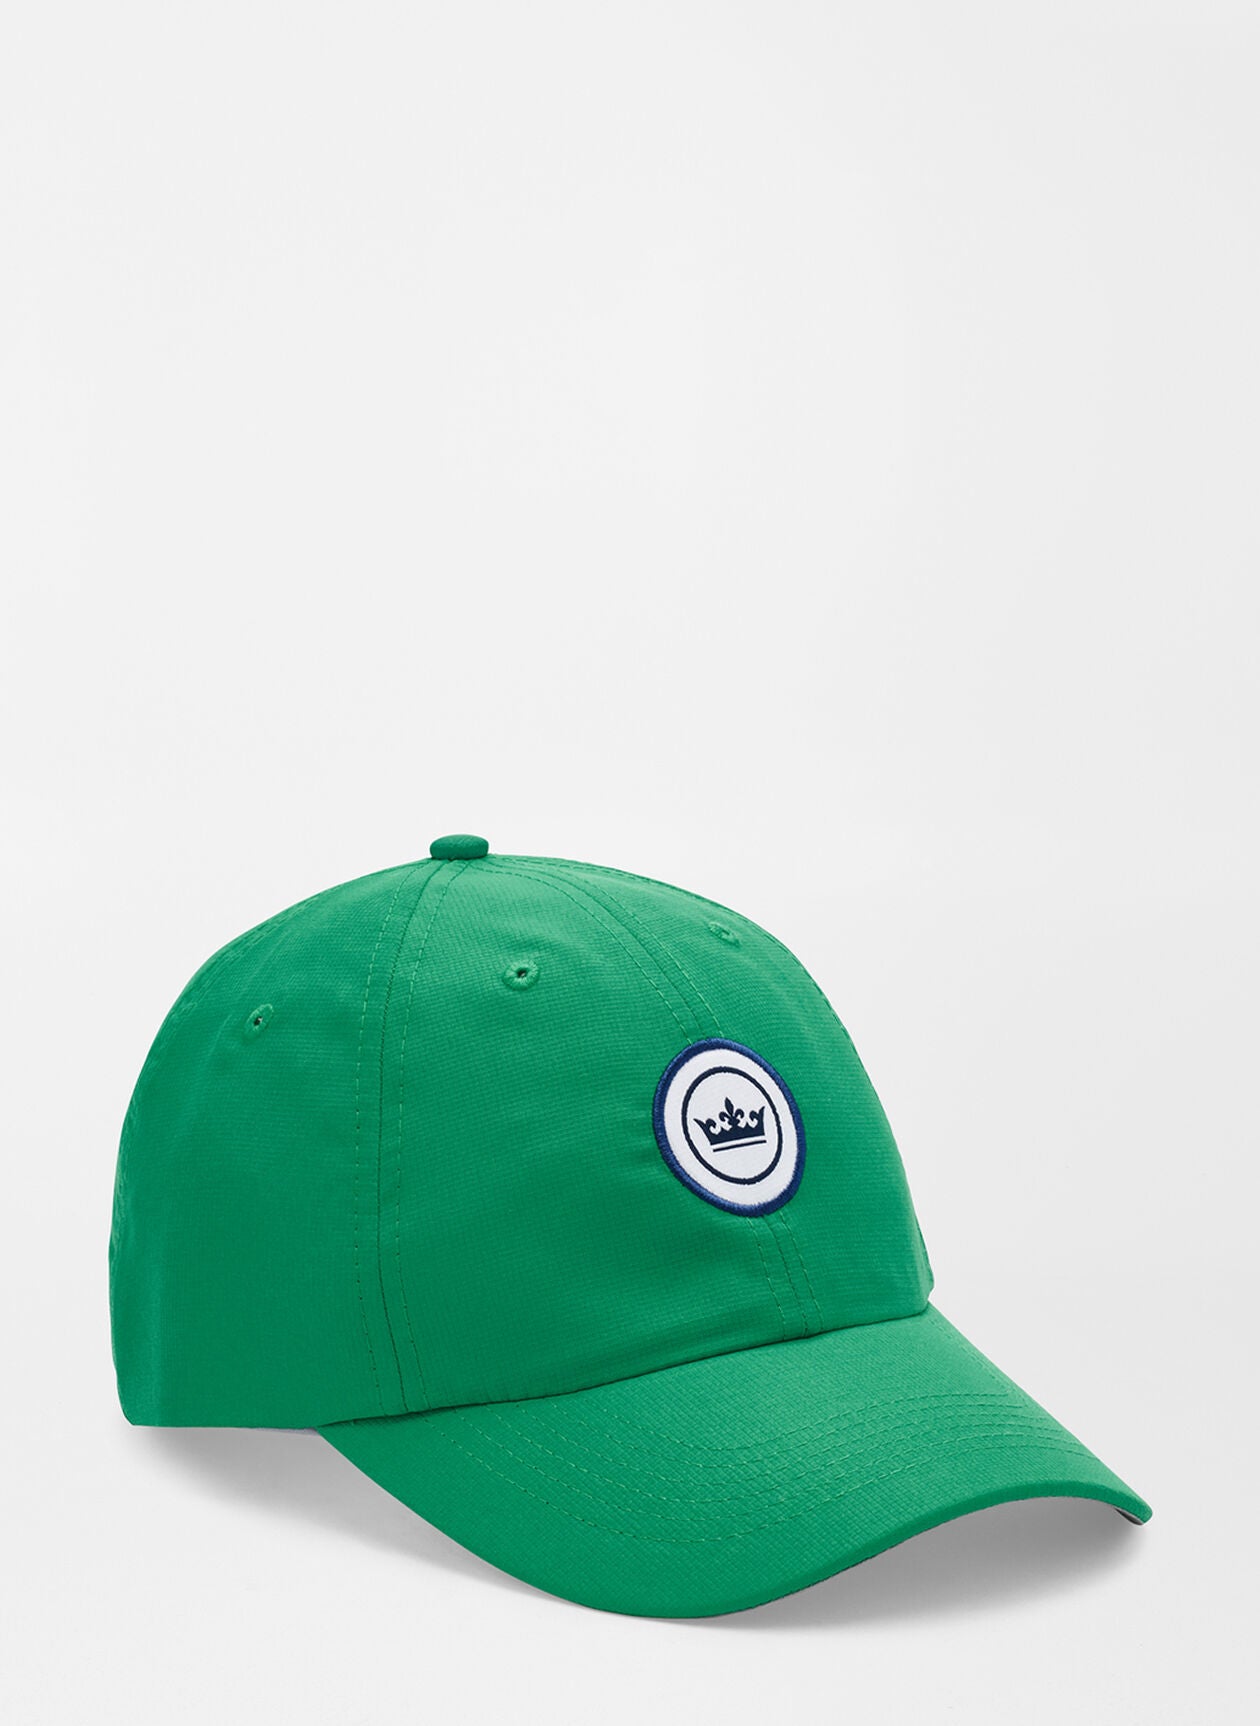 Peter Millar Crown Seal Performance Hat - Field Green